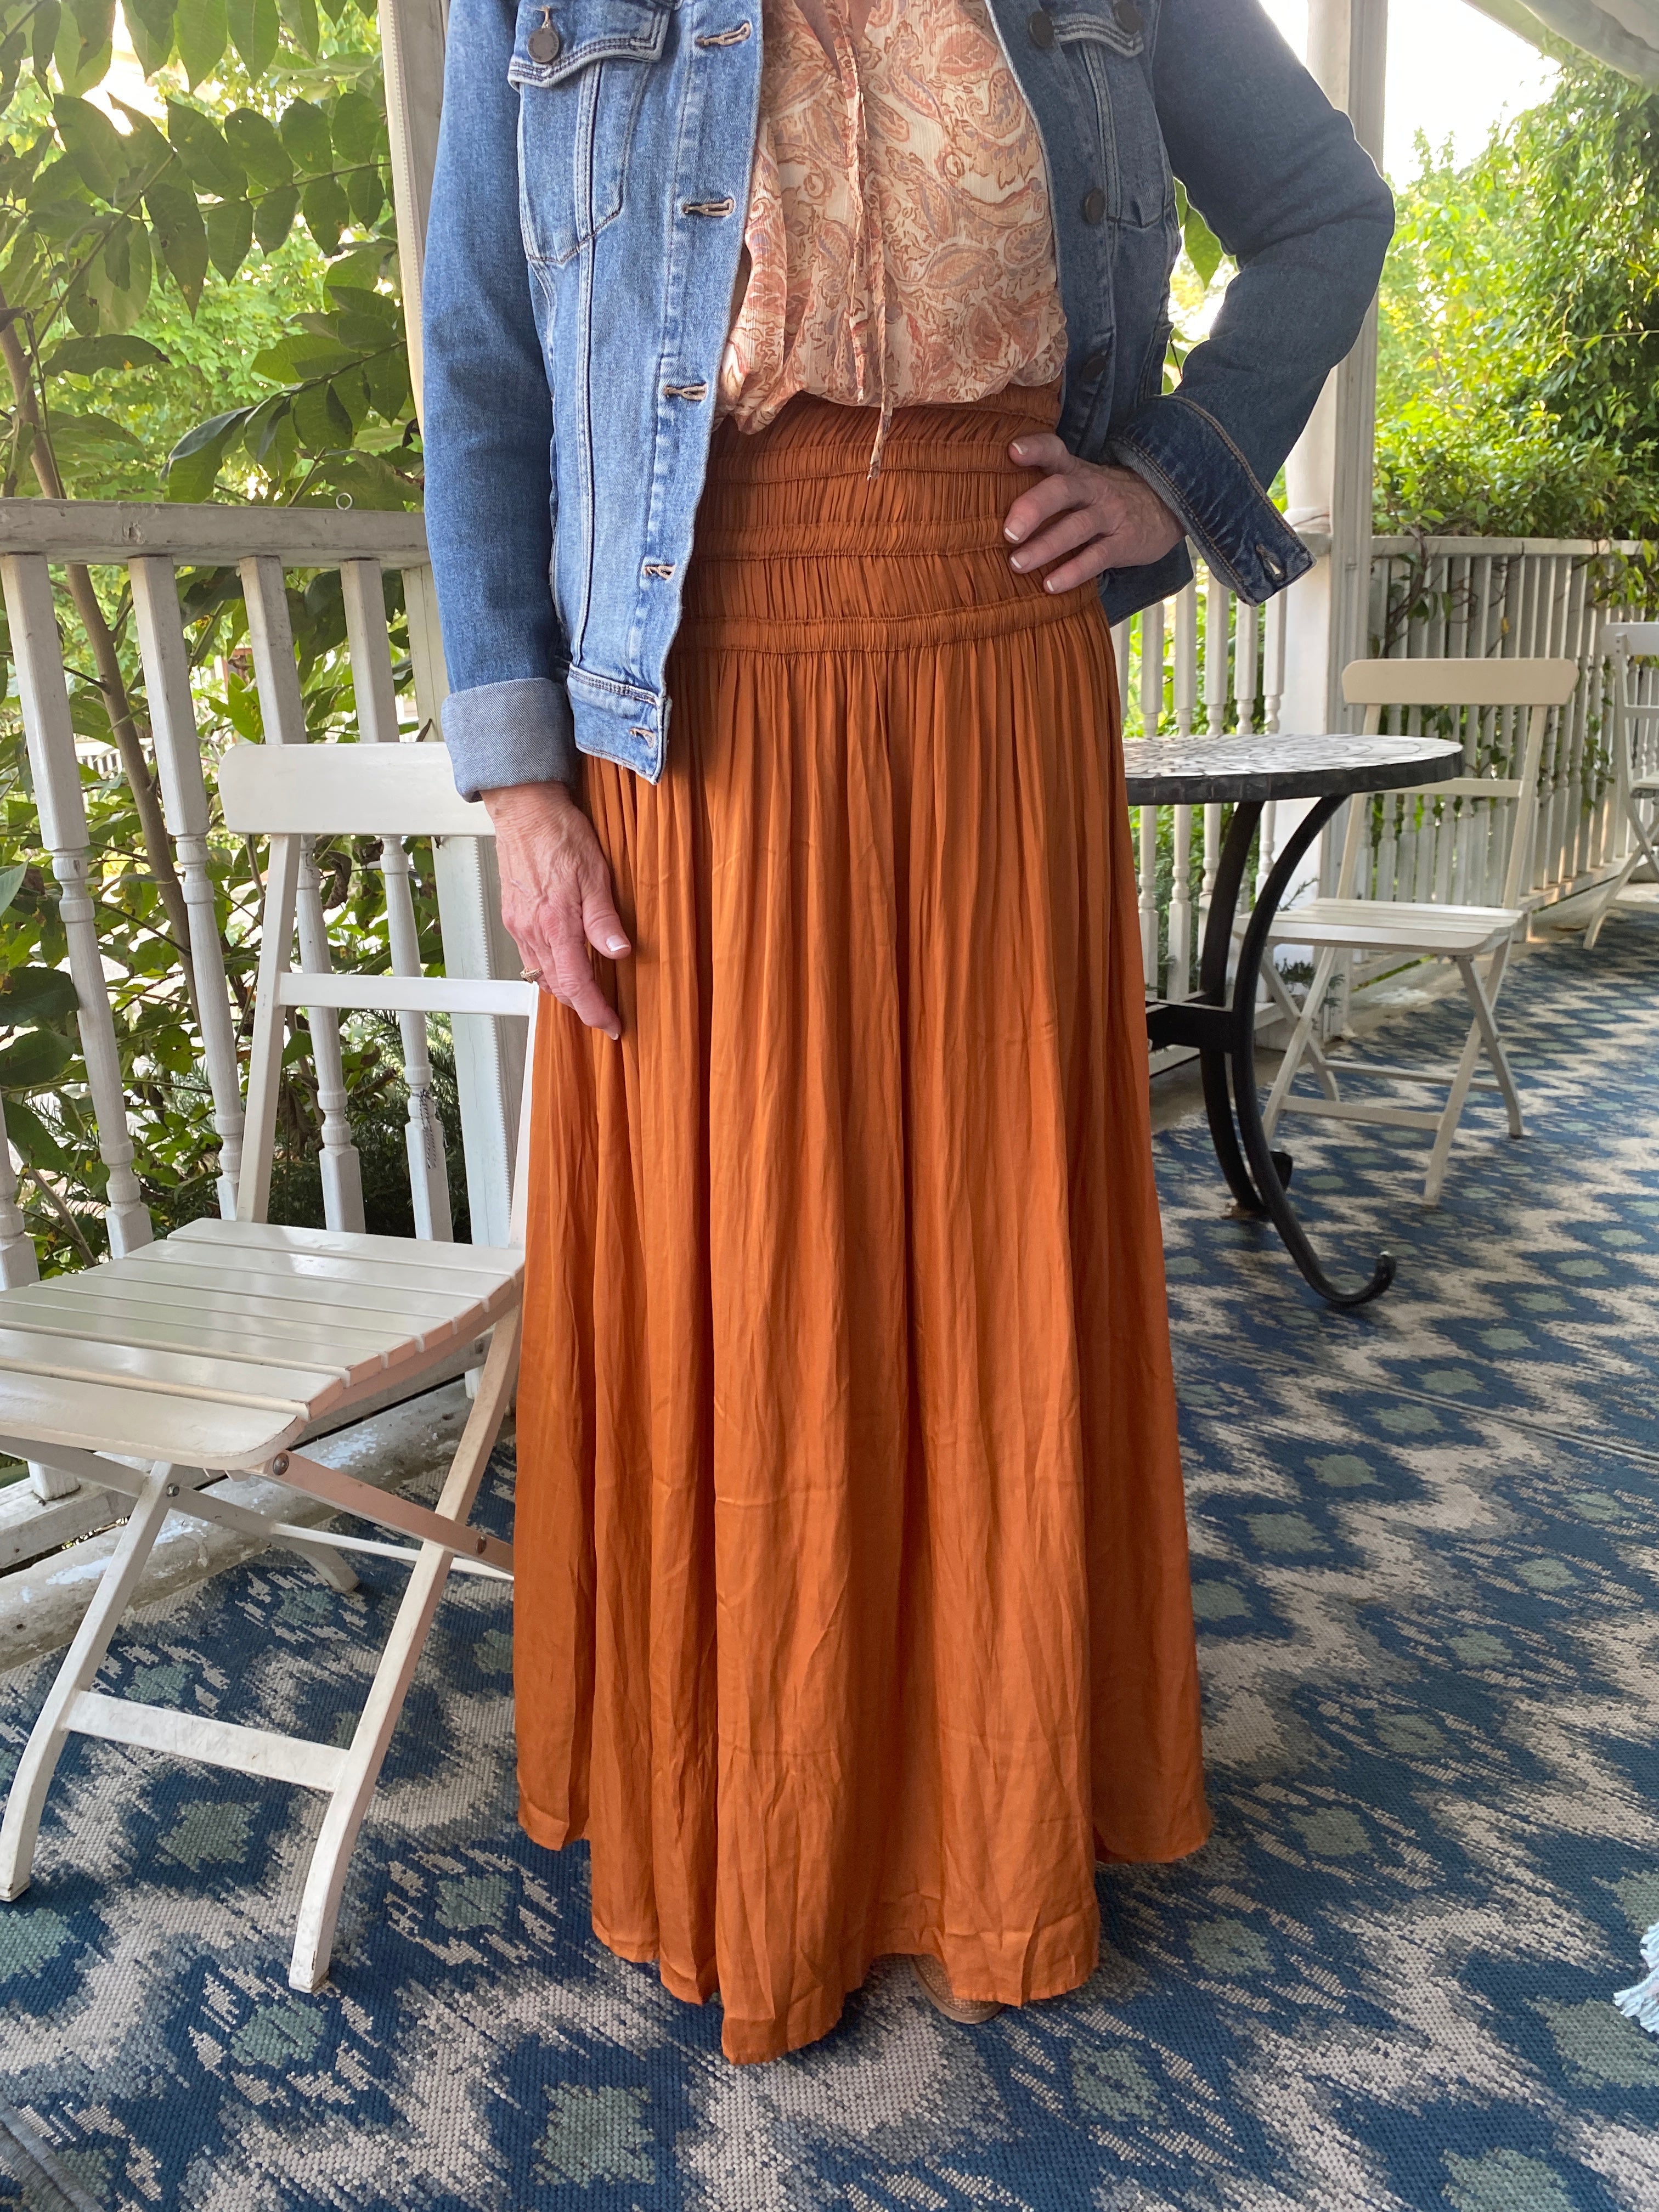 Soft and Silky Rust Tube Skirt/Dress